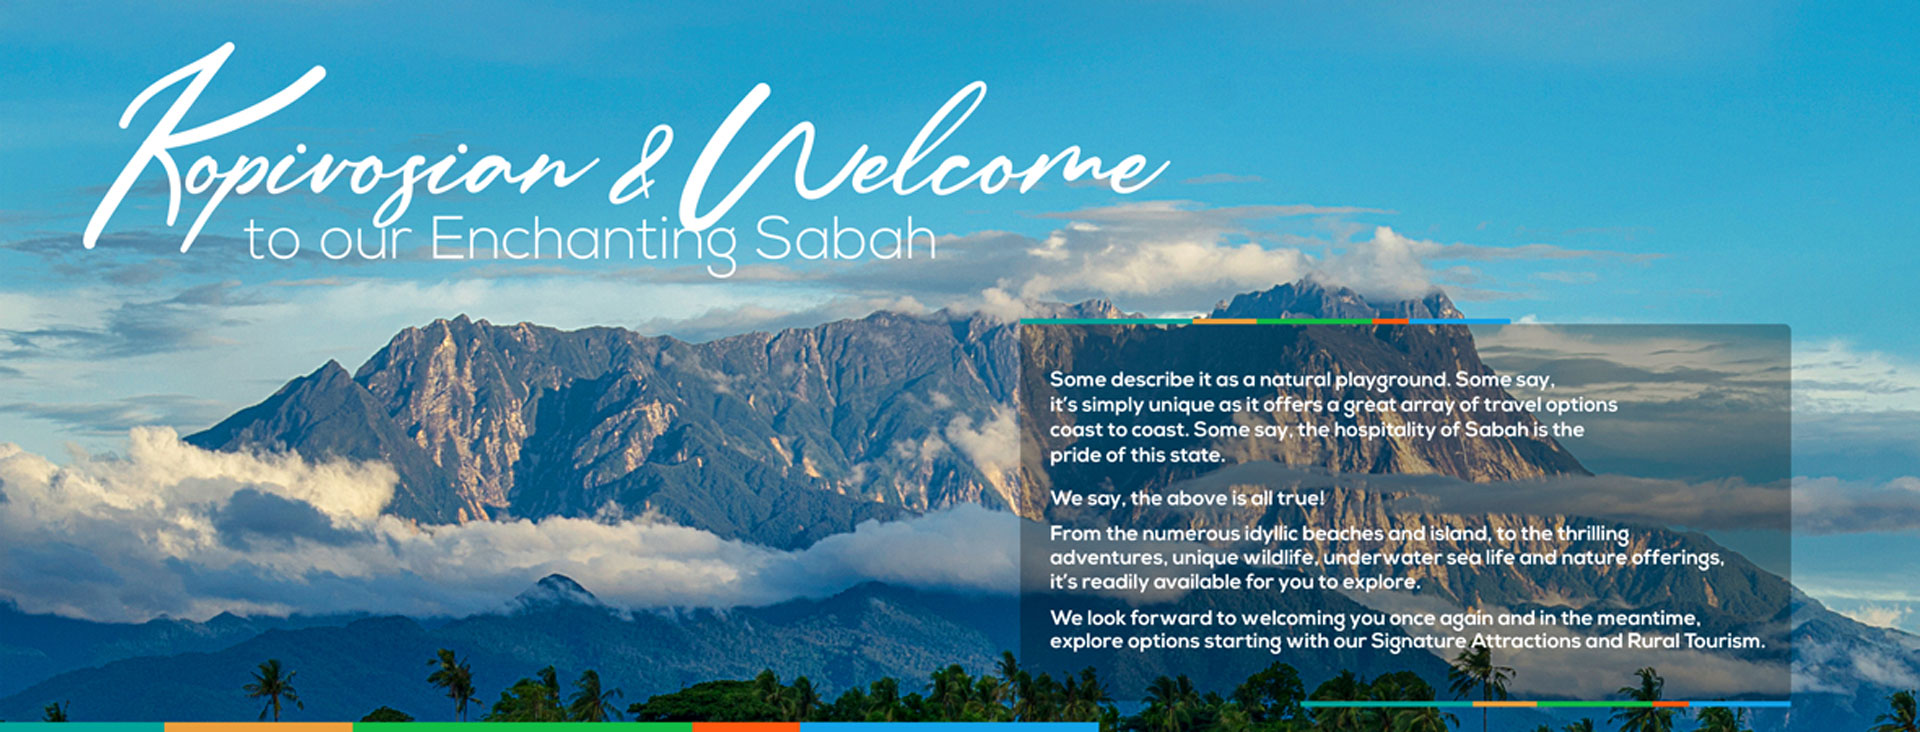 Welcome to Sabah, Malaysian Borneo